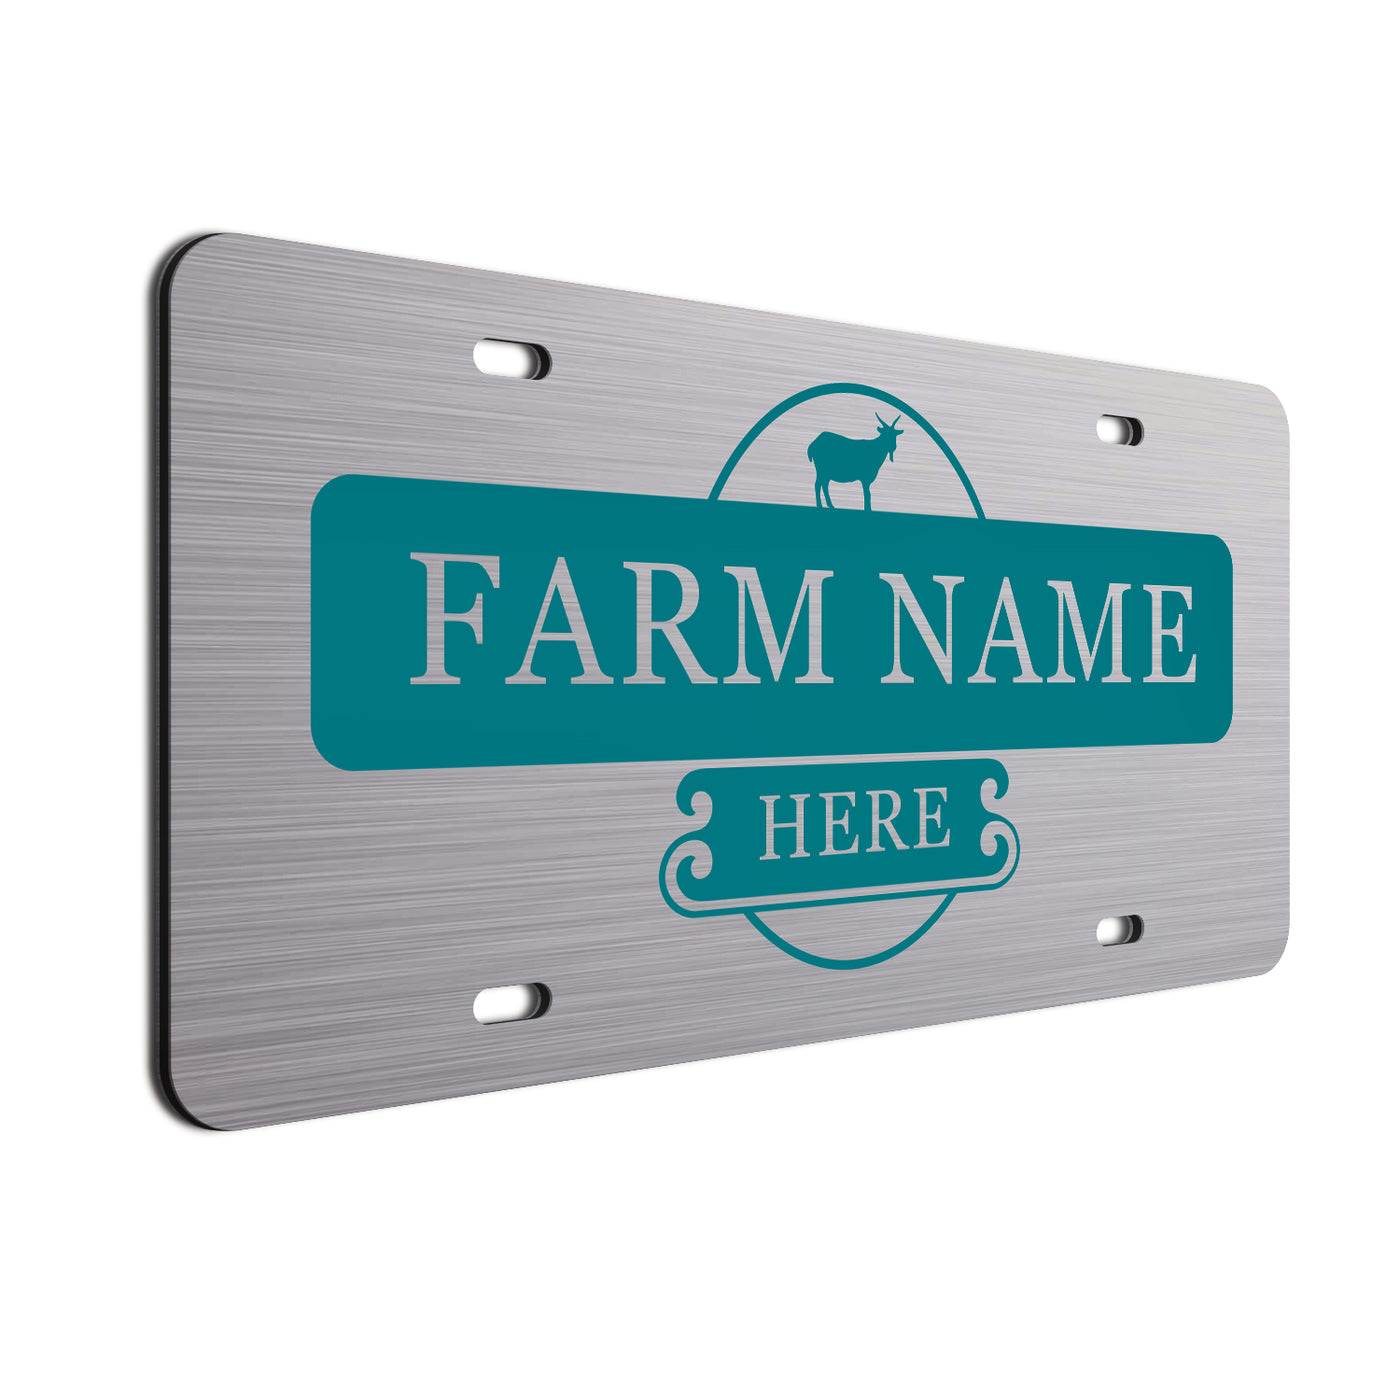 Farmer Car License Plate Teal Goat